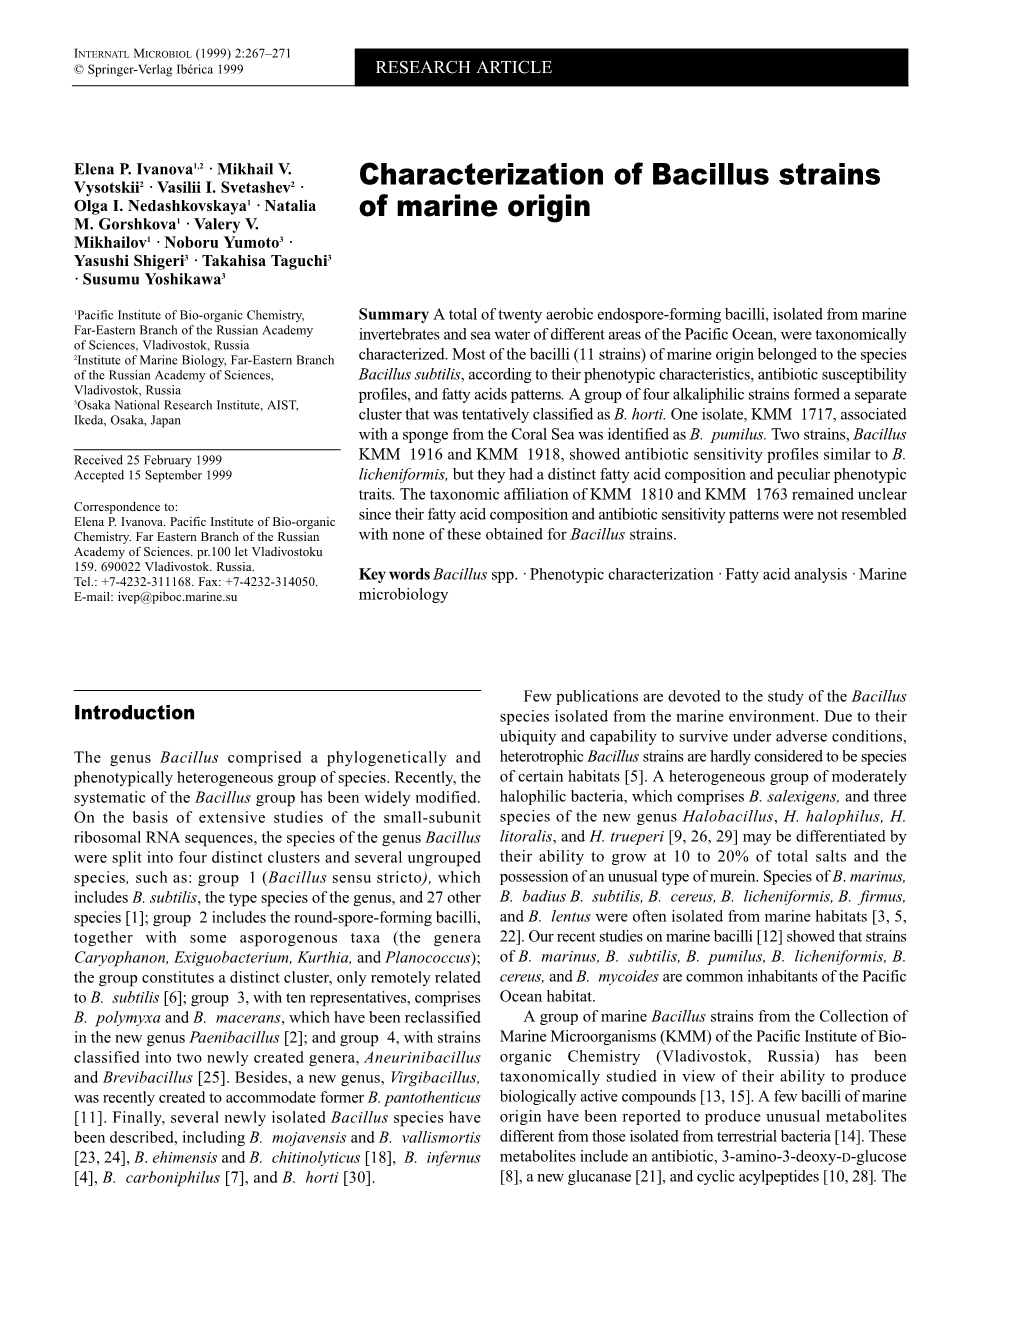 Characterization of Bacillus Strains of Marine Origin